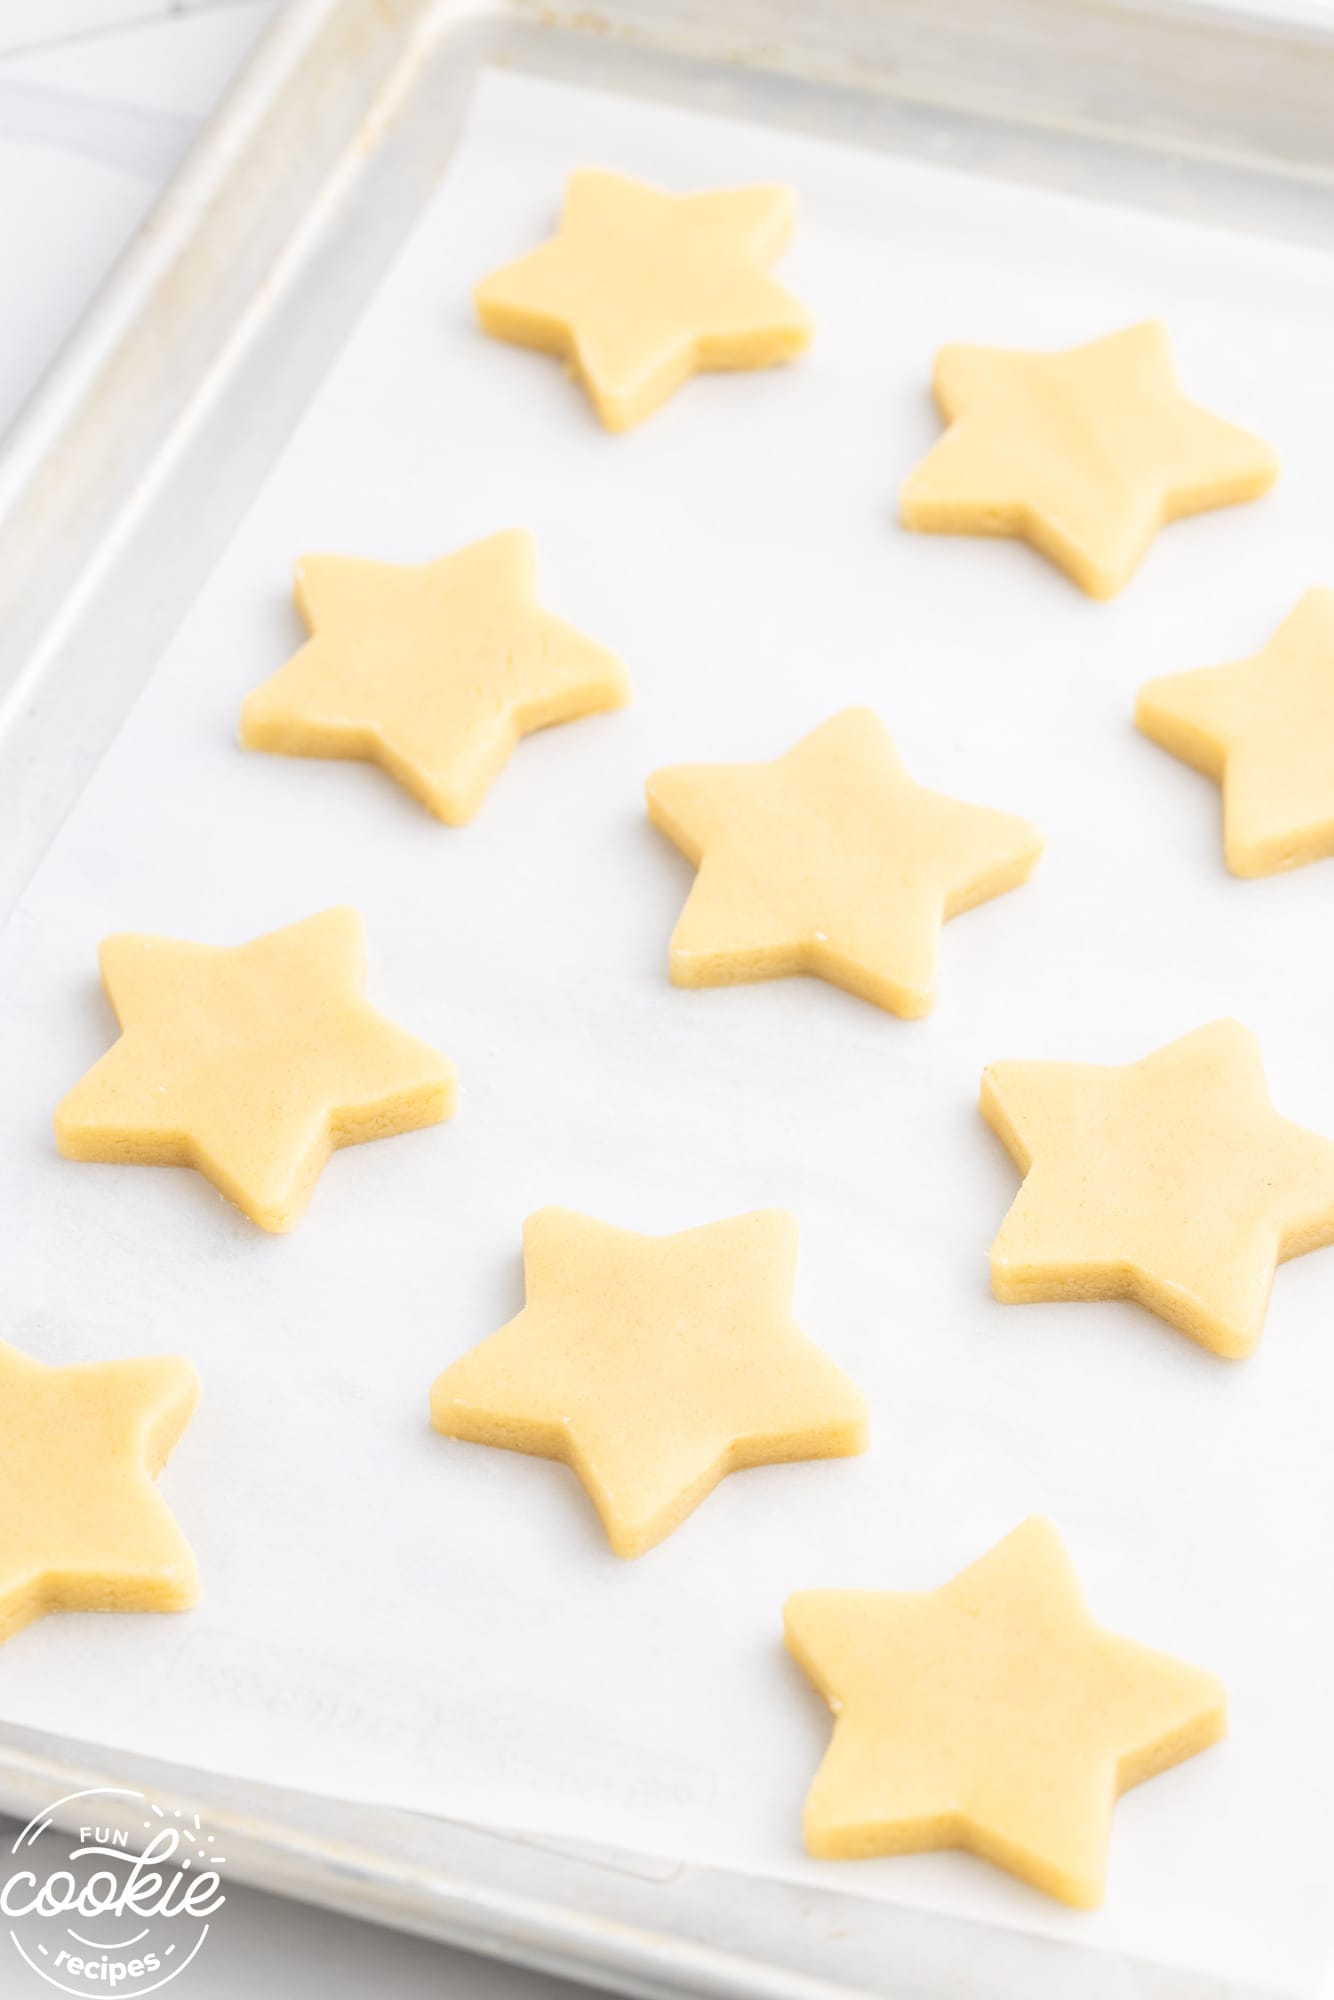 Star shaped sugar cookie dough on a baking sheet before baking